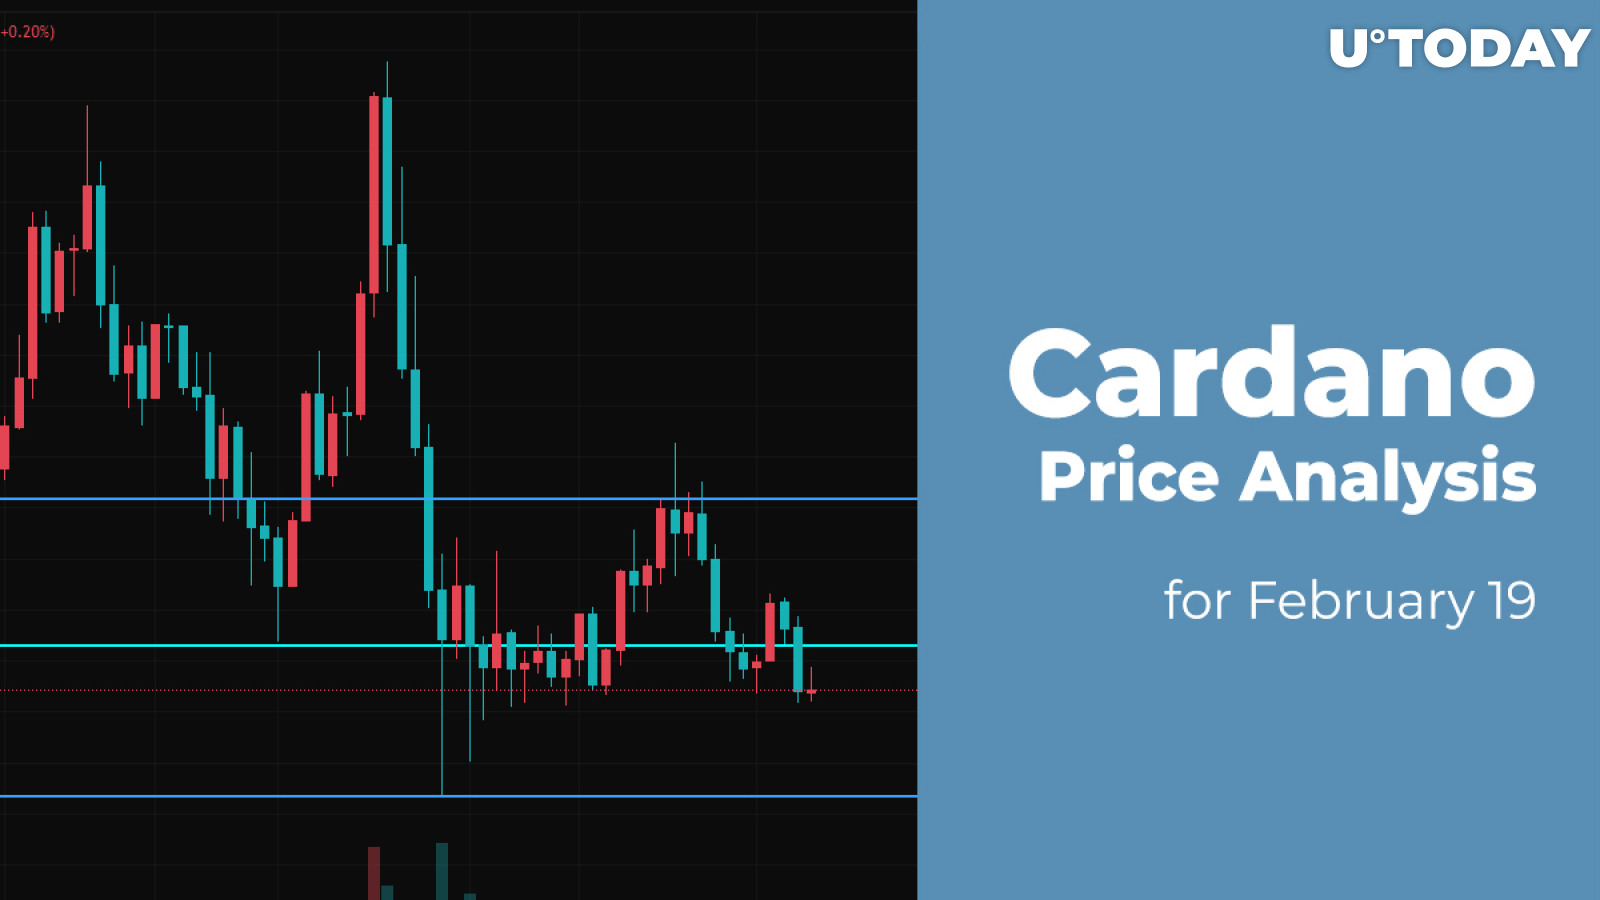 Cardano (ADA) Price Analysis for February 19